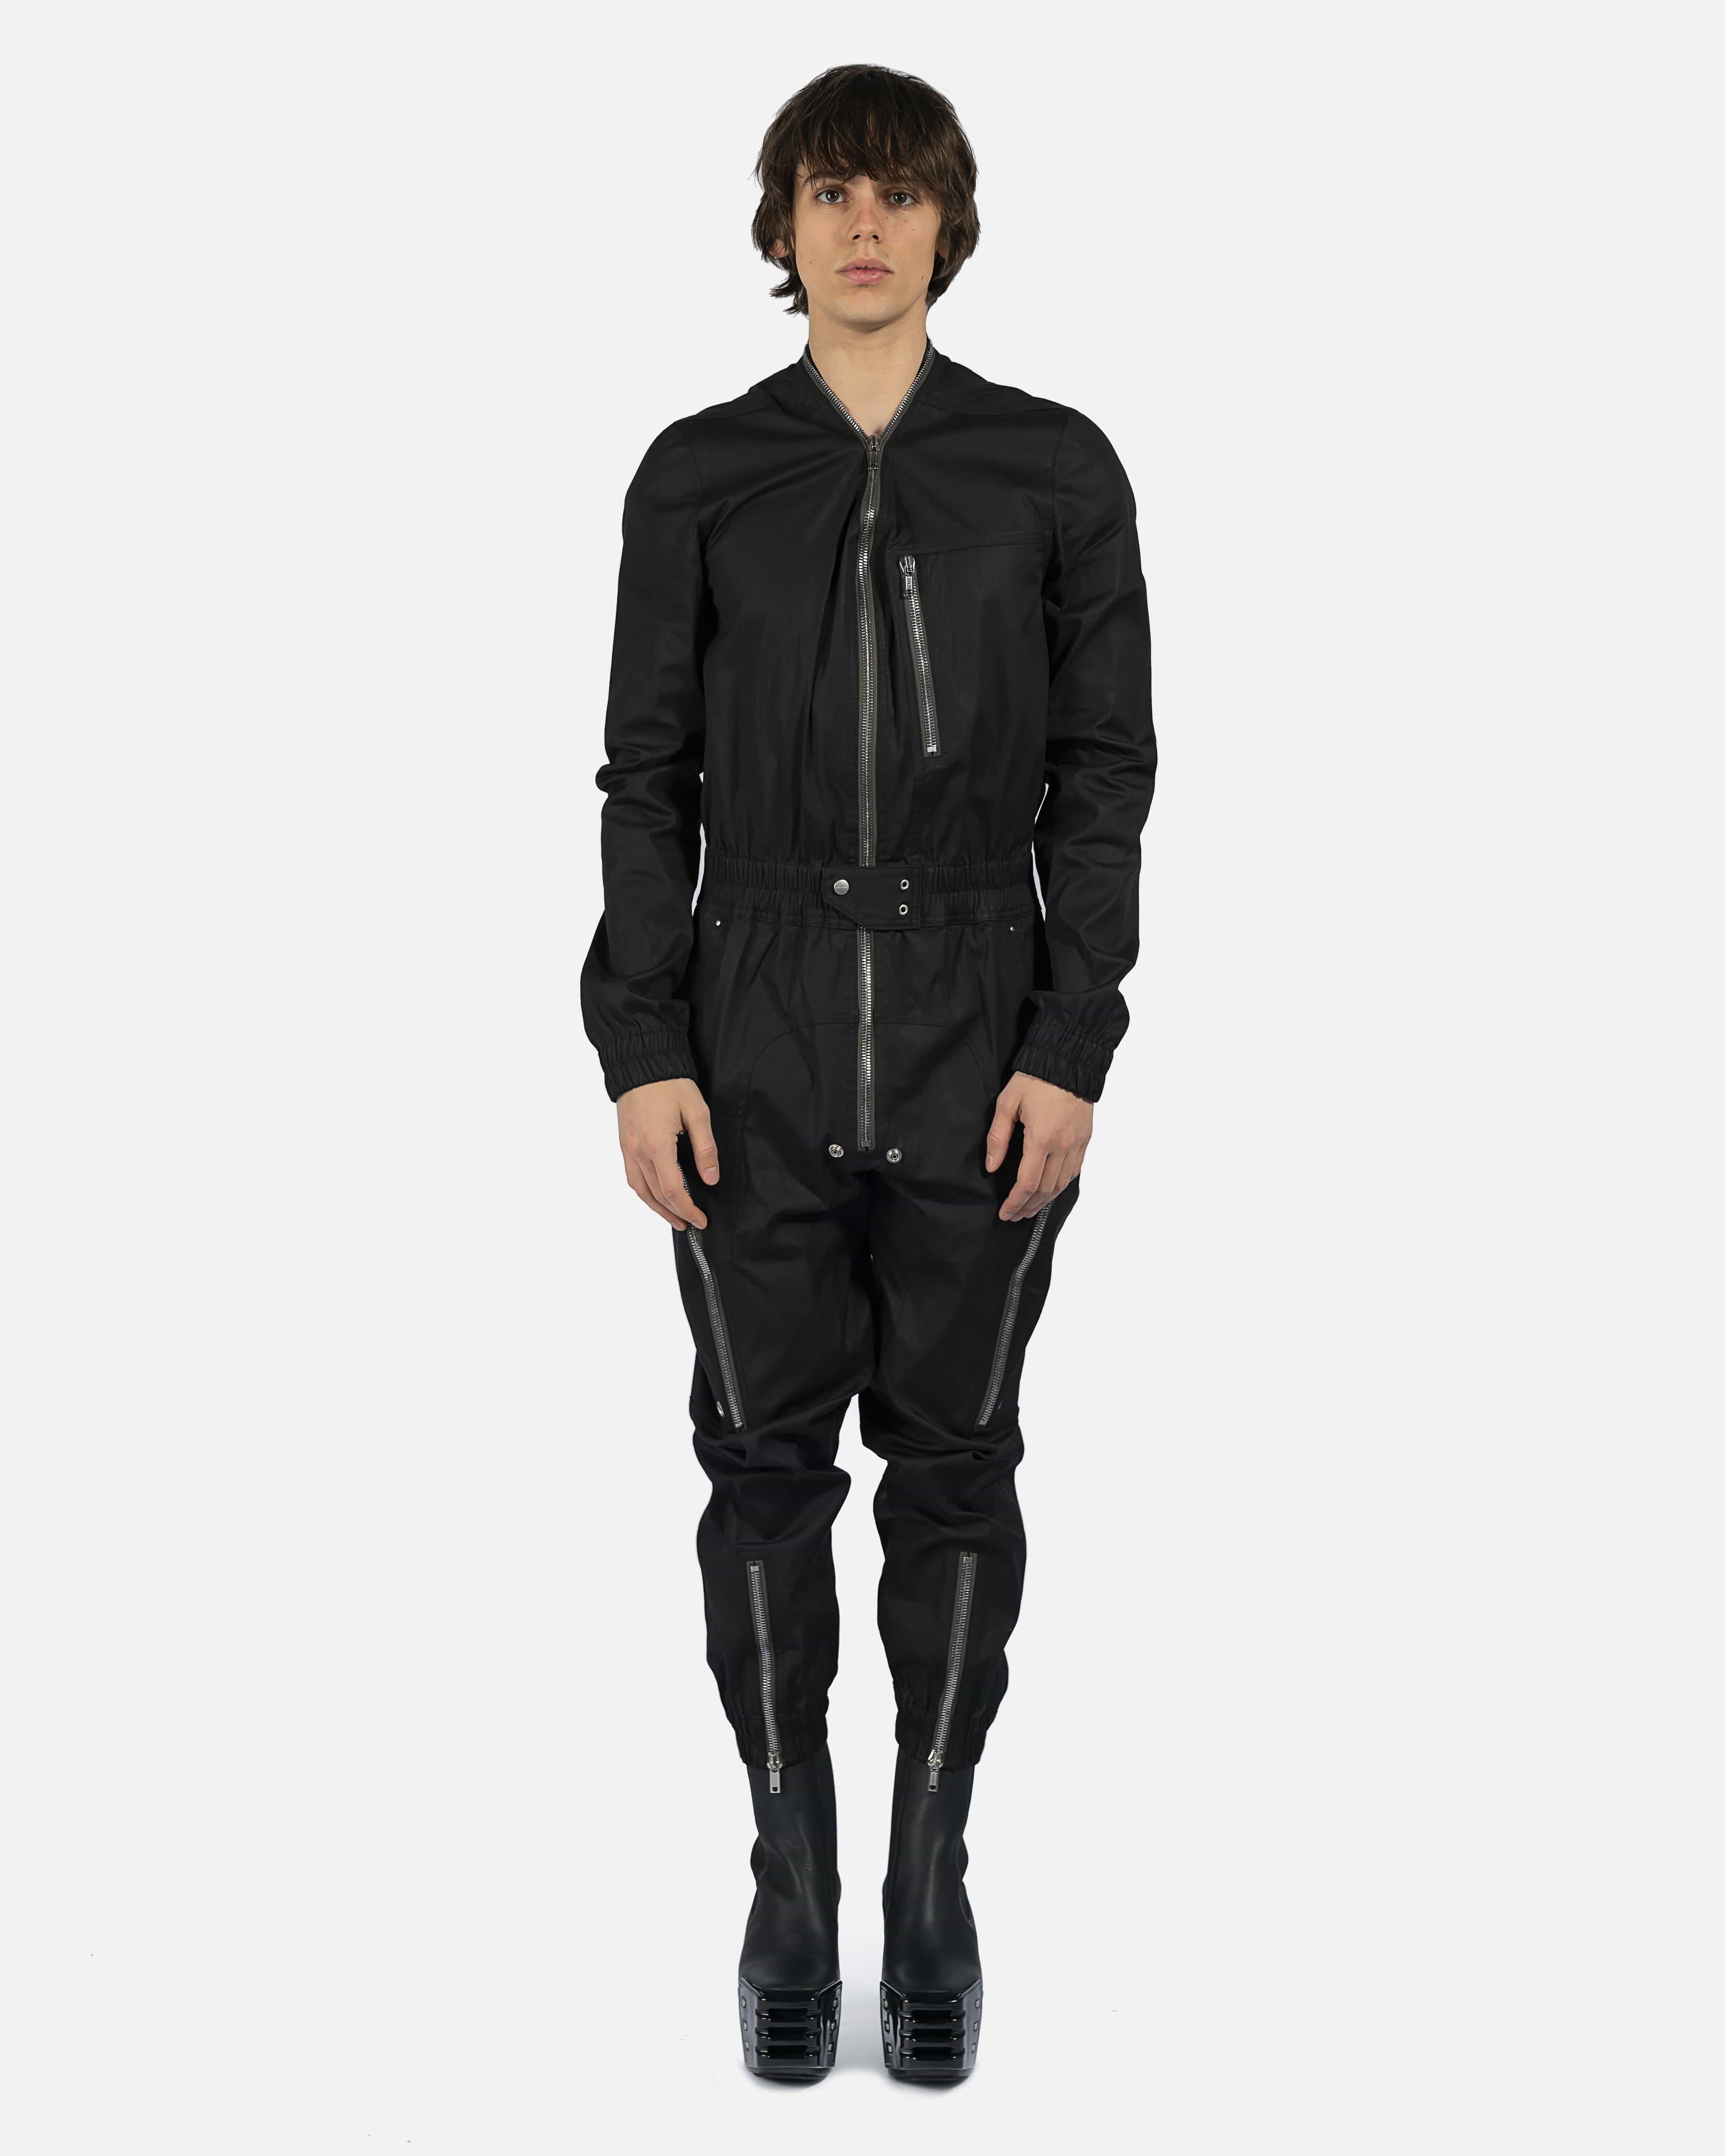 Bauhaus Larry Flightsuit in Black – SVRN